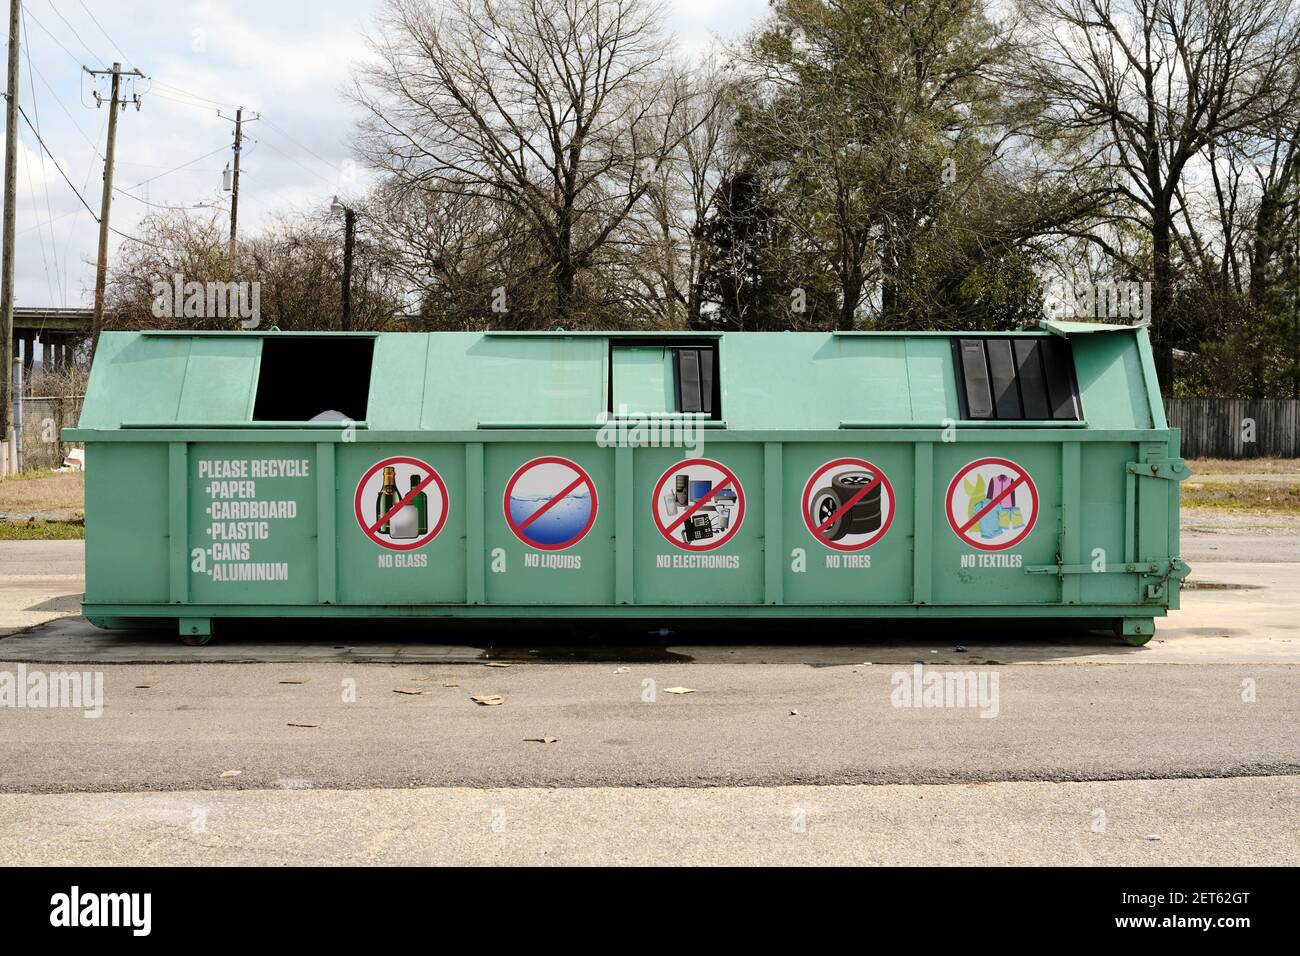 Grande cestino per riciclare plastica, carta e cartone a Montgomery Alabama, USA. Foto Stock